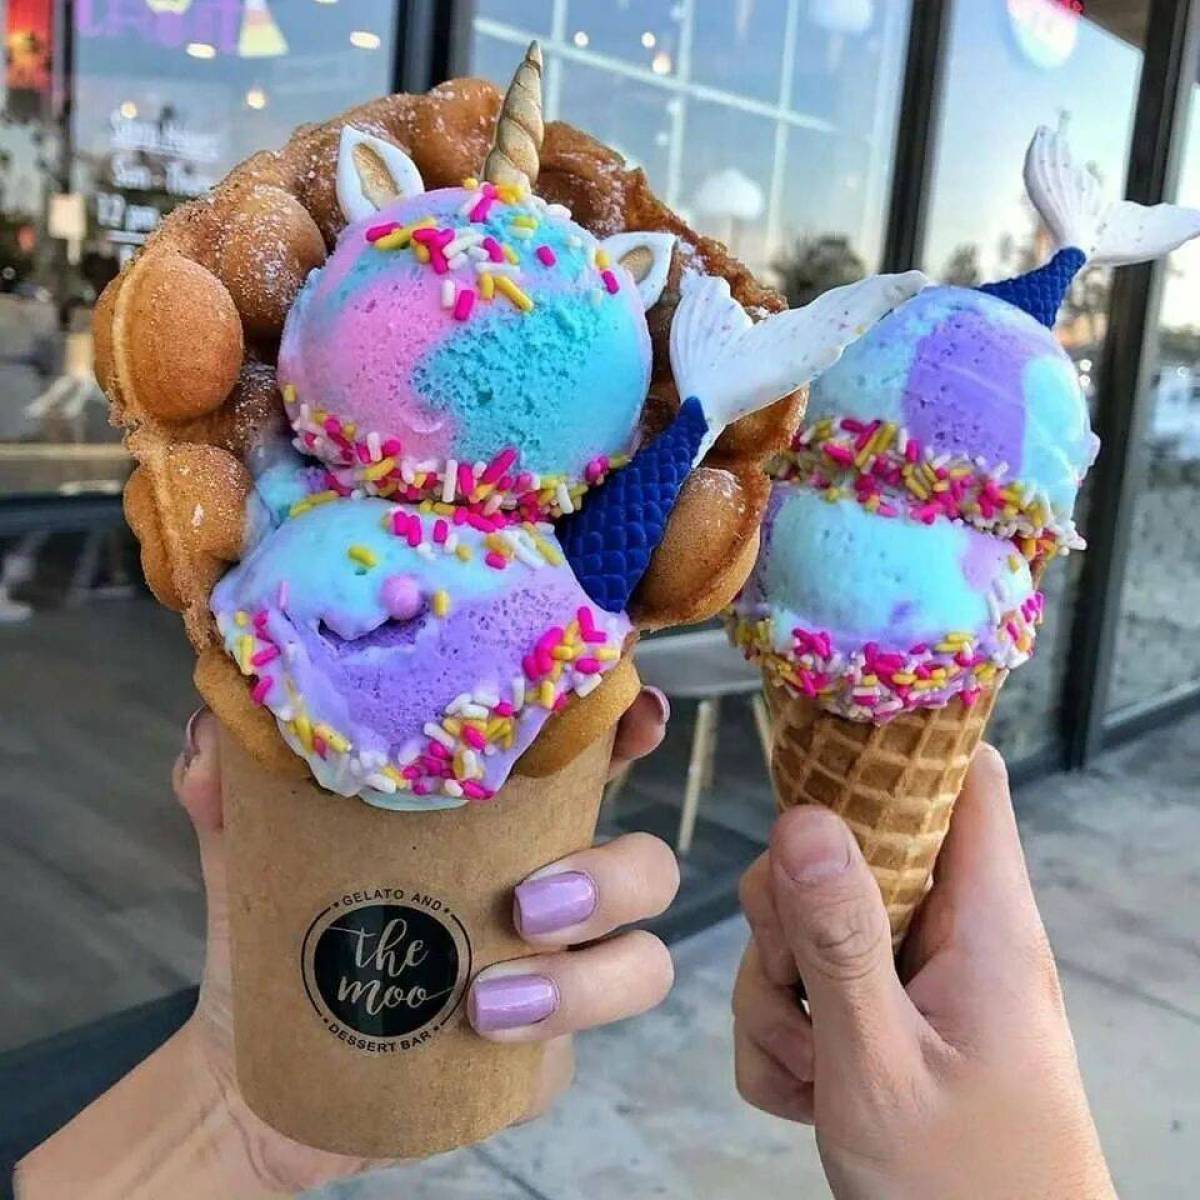 Ice cream new. Необычное мороженое. Красивое мороженое. Самое красивое мороженое. Необычные формы мороженого.